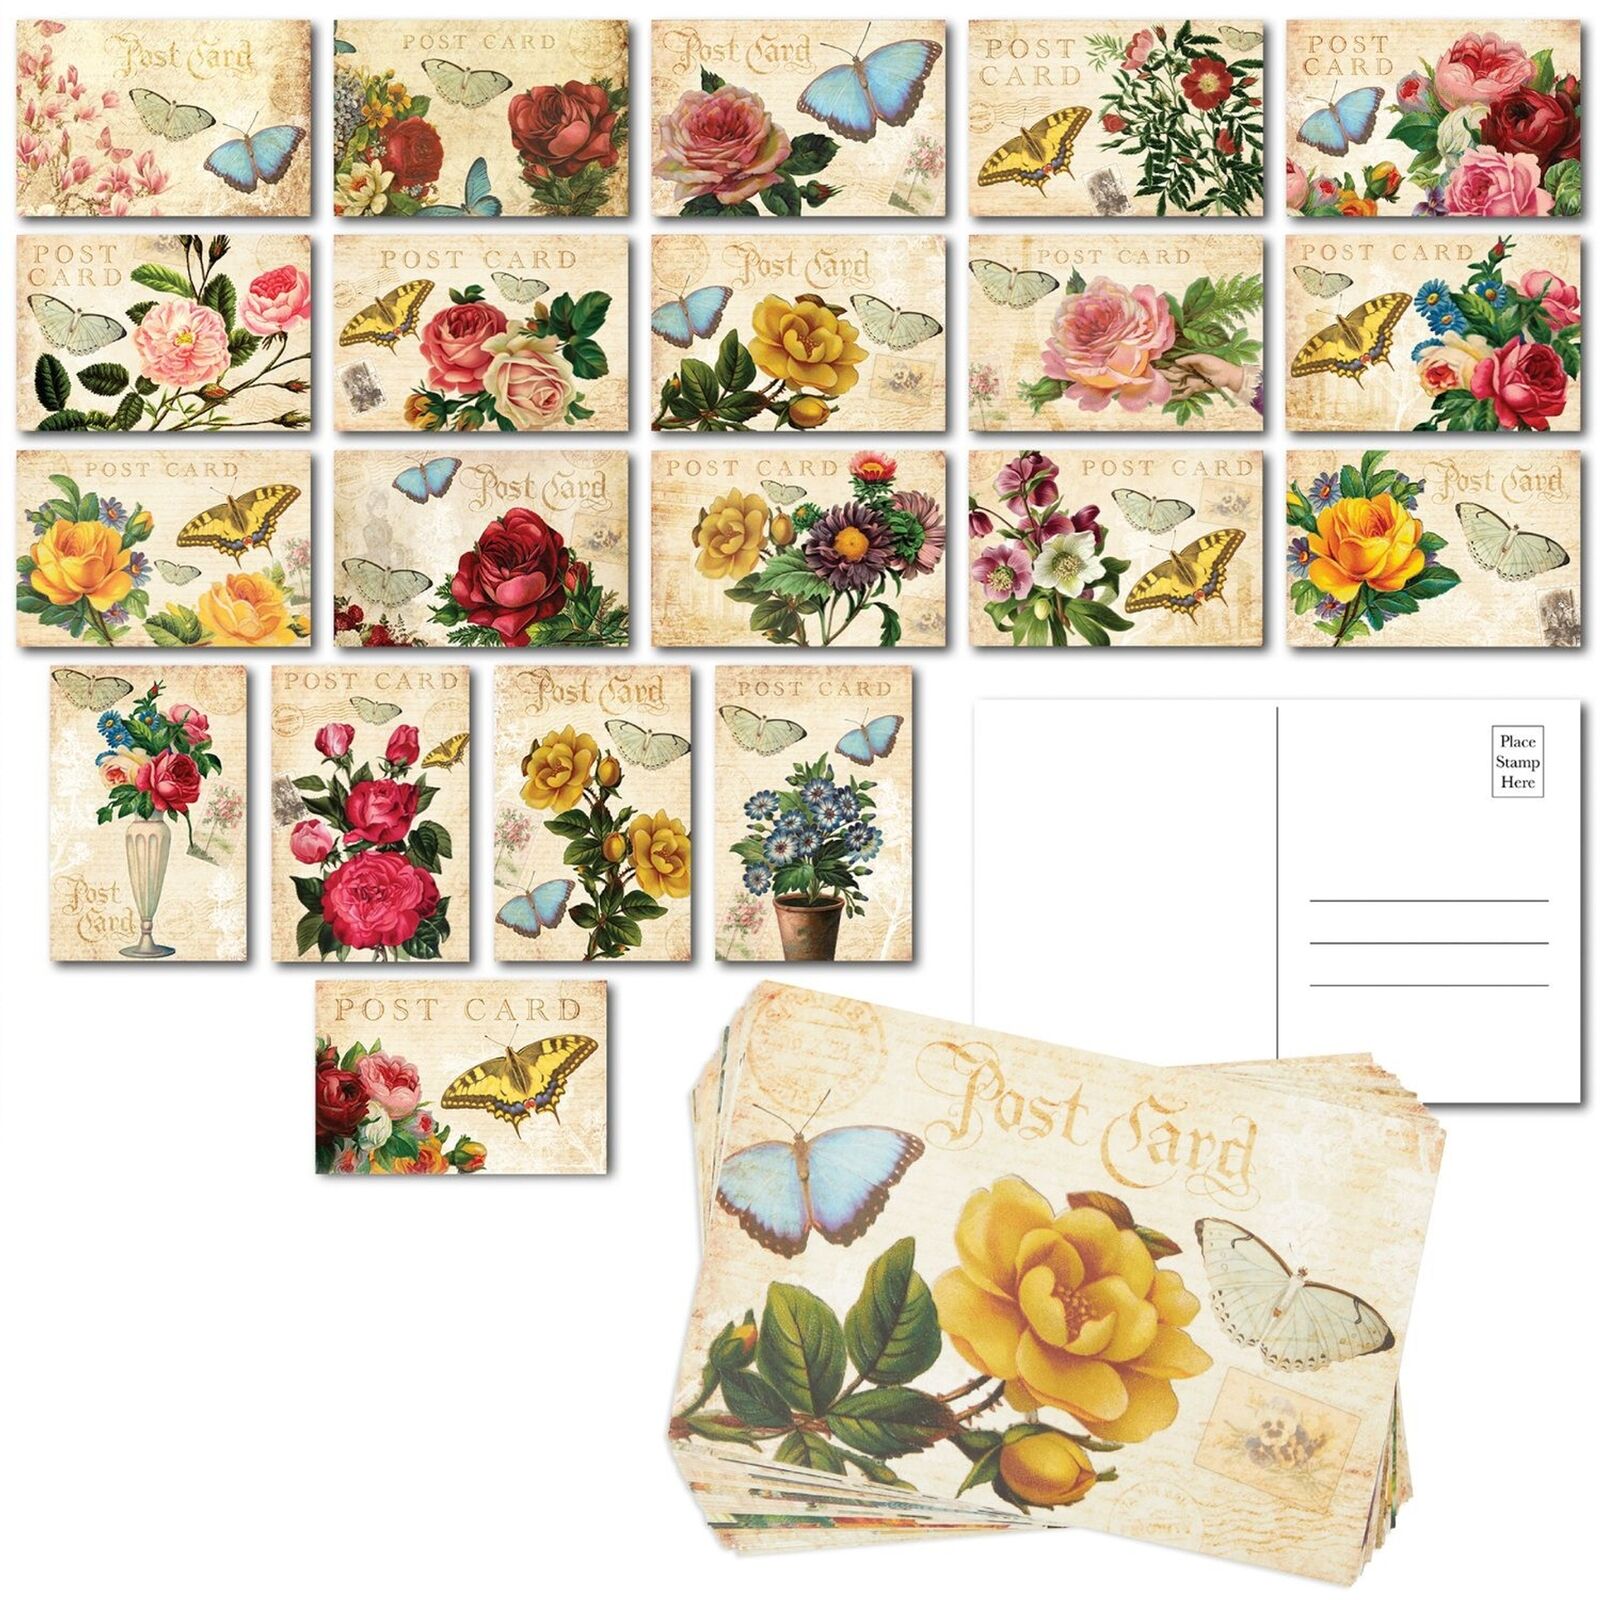 40 Pack Victorian Vintage Postcards Bulk Set with Floral Design, 4 x 6 Inches